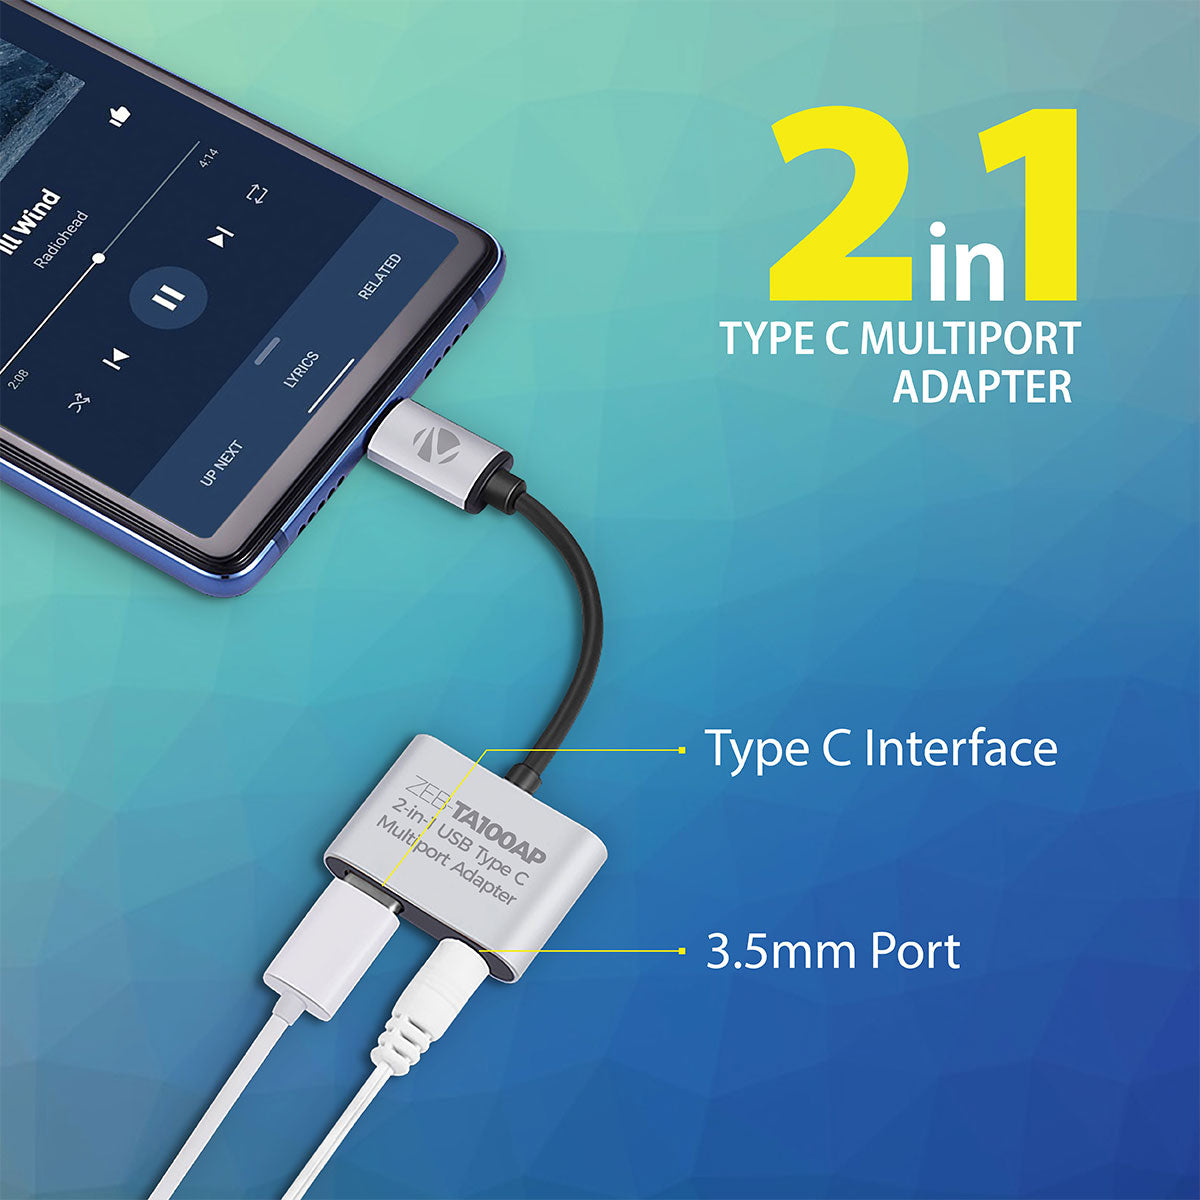 Zeb TA100AP - 2 in 1 USB Type C Multiport Adapter - Zebronics